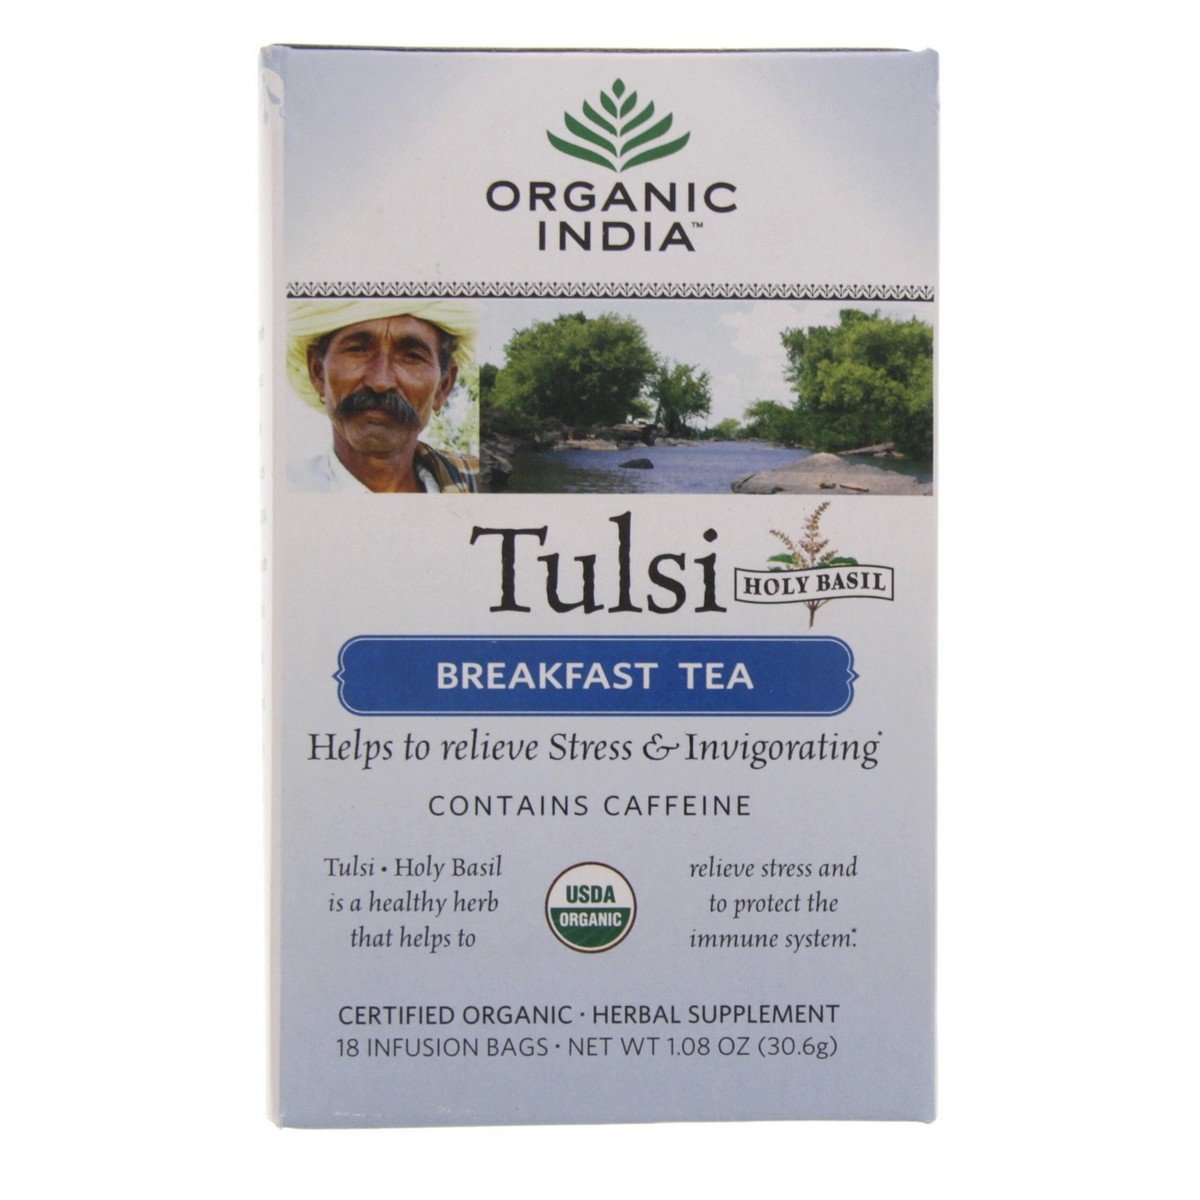 Organic India Tulsi Breakfast Tea 18 Infusion Bags